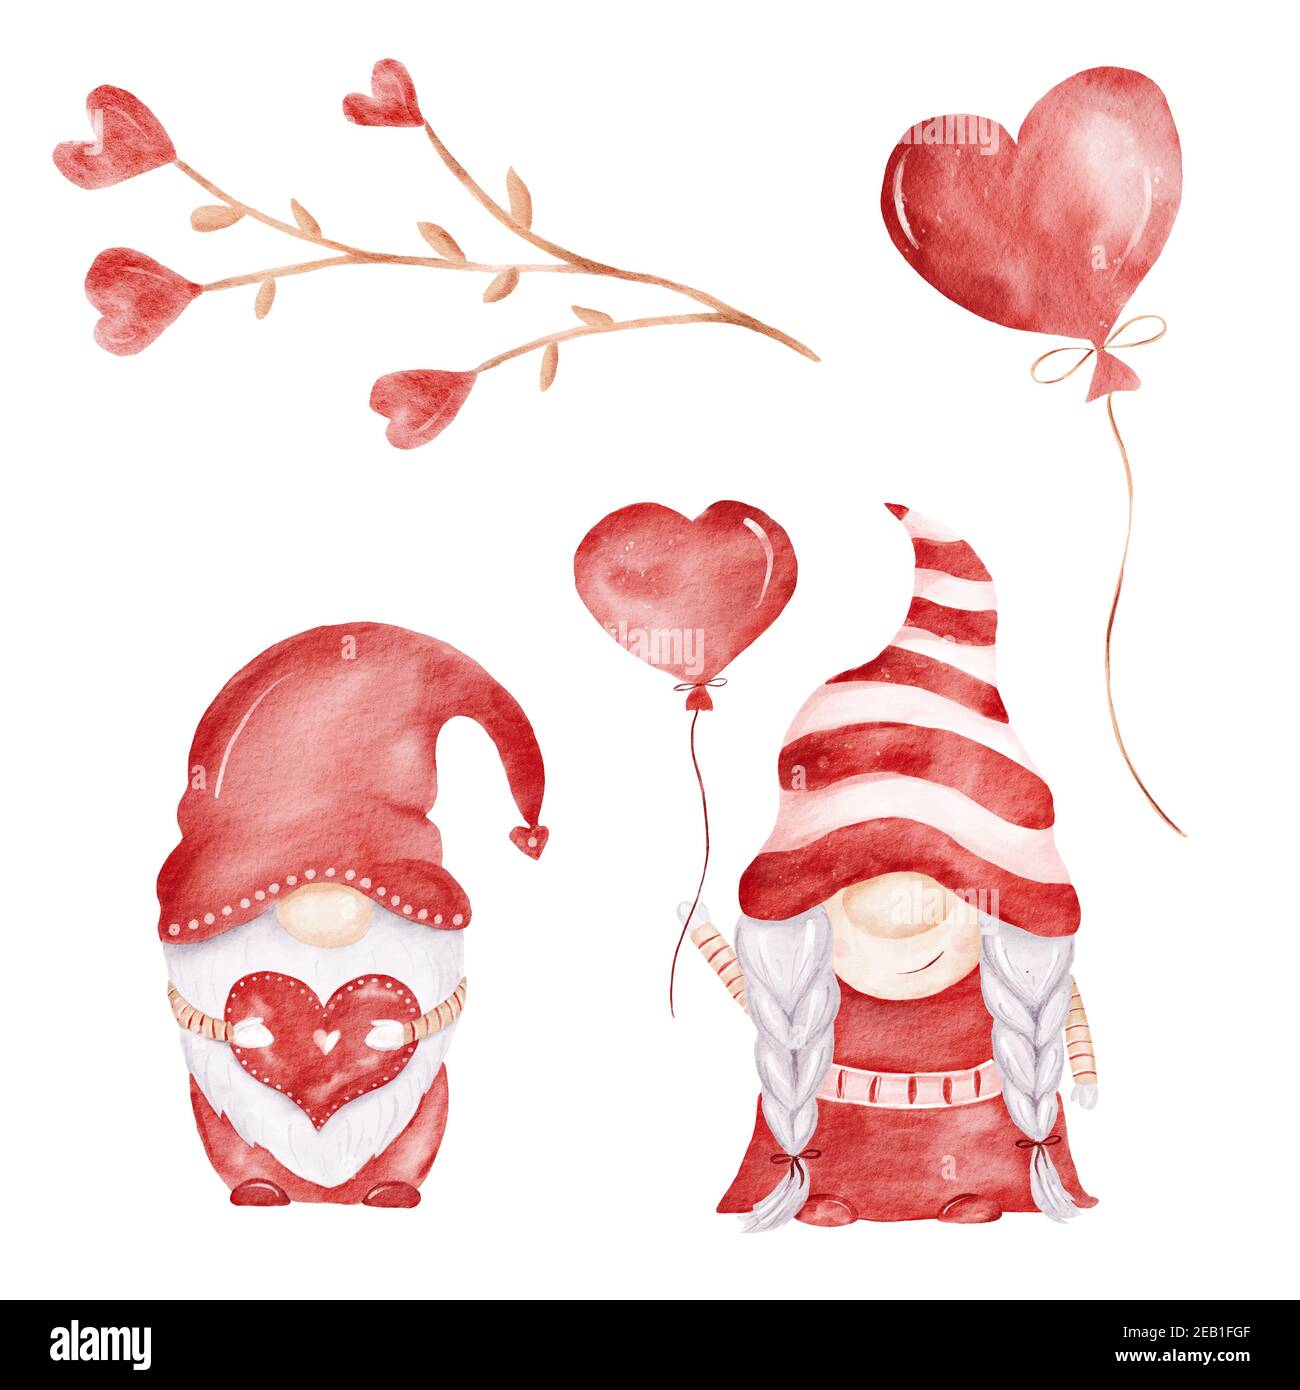 1pc Valentine Gnome Stencil Plastic PET Love Balloons Painting